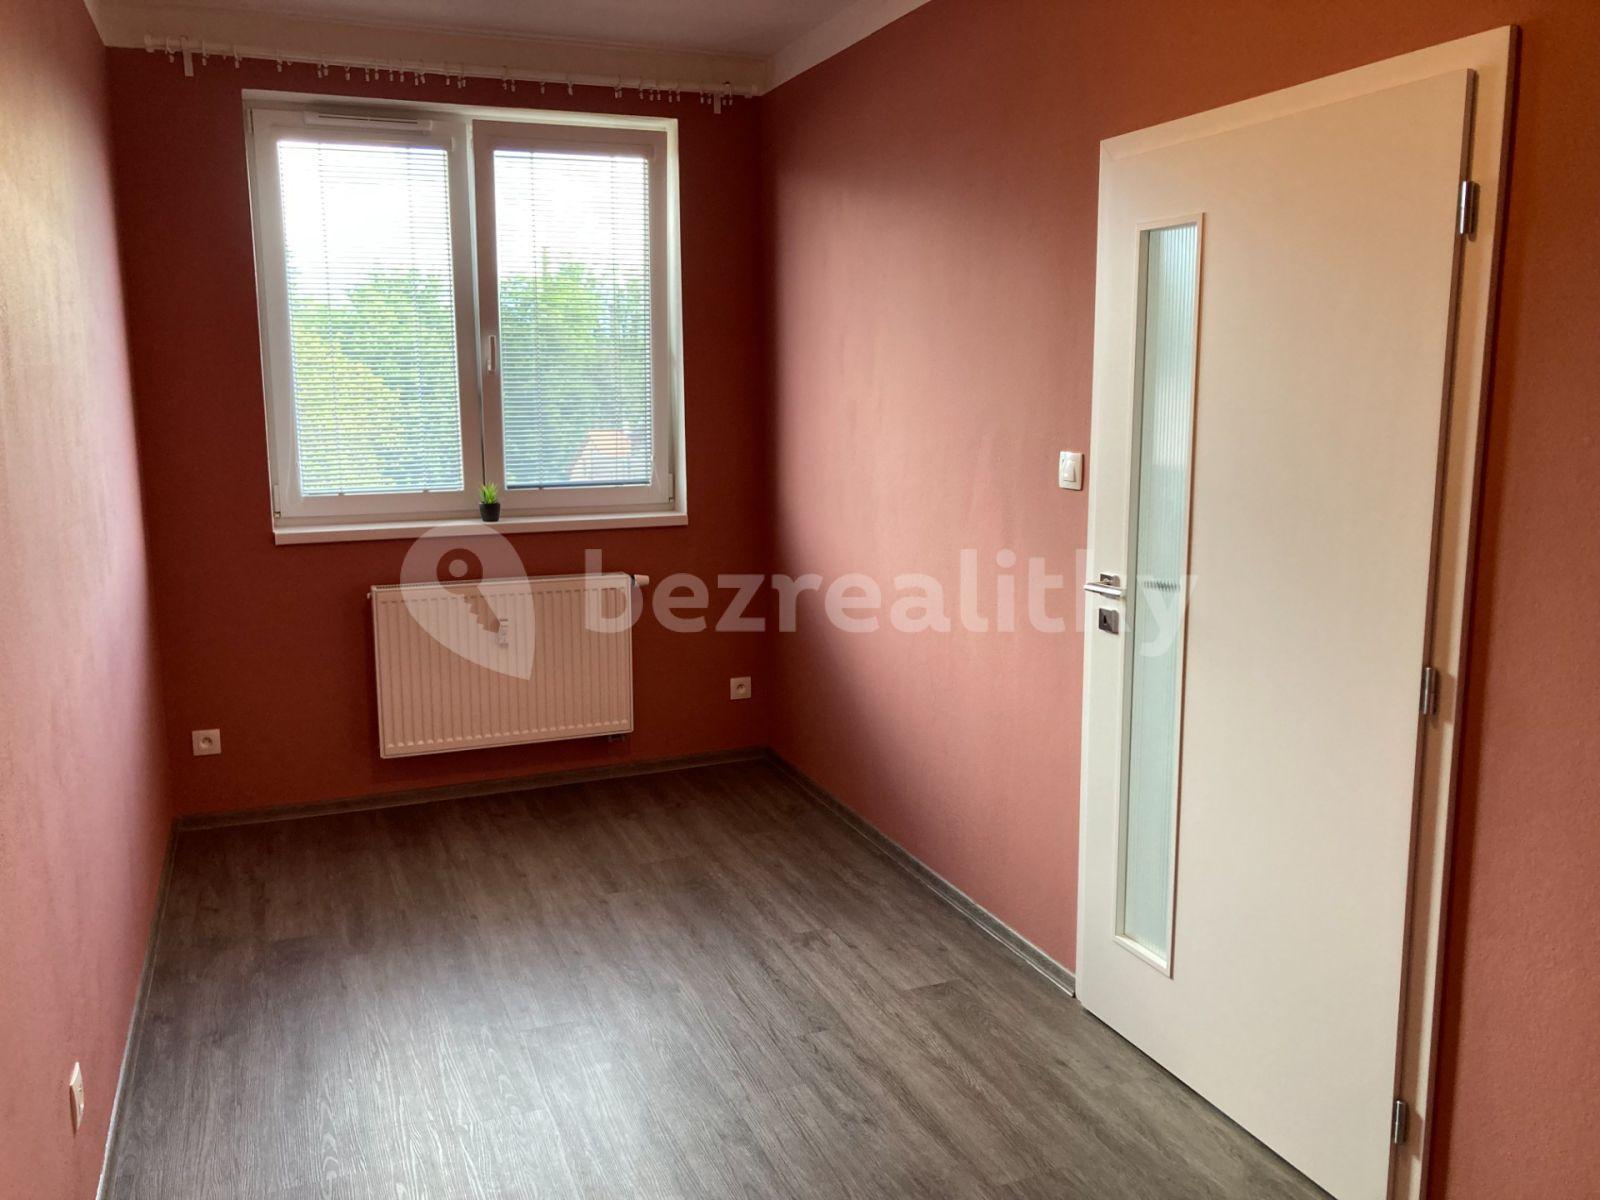 Predaj bytu 2-izbový 48 m², Palackého, Český Brod, Středočeský kraj